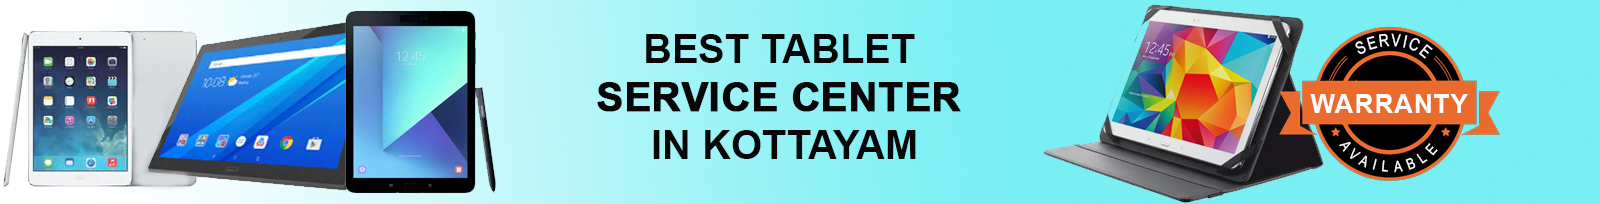 Best Smartphone Service Center Kottayam